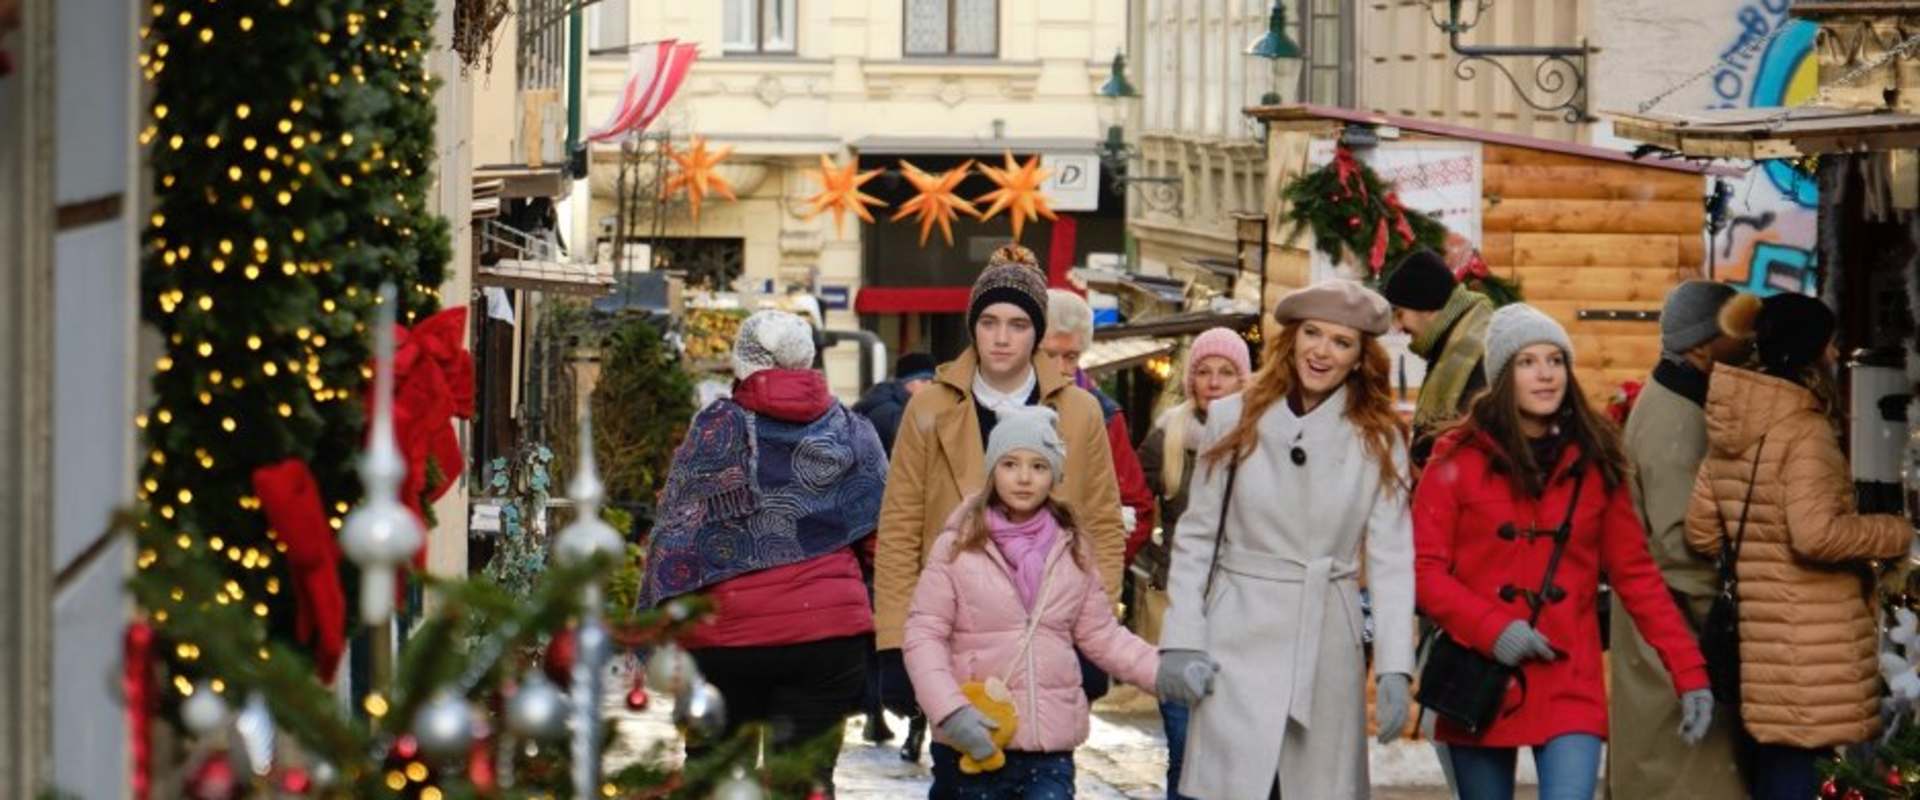 Christmas in Vienna background 2